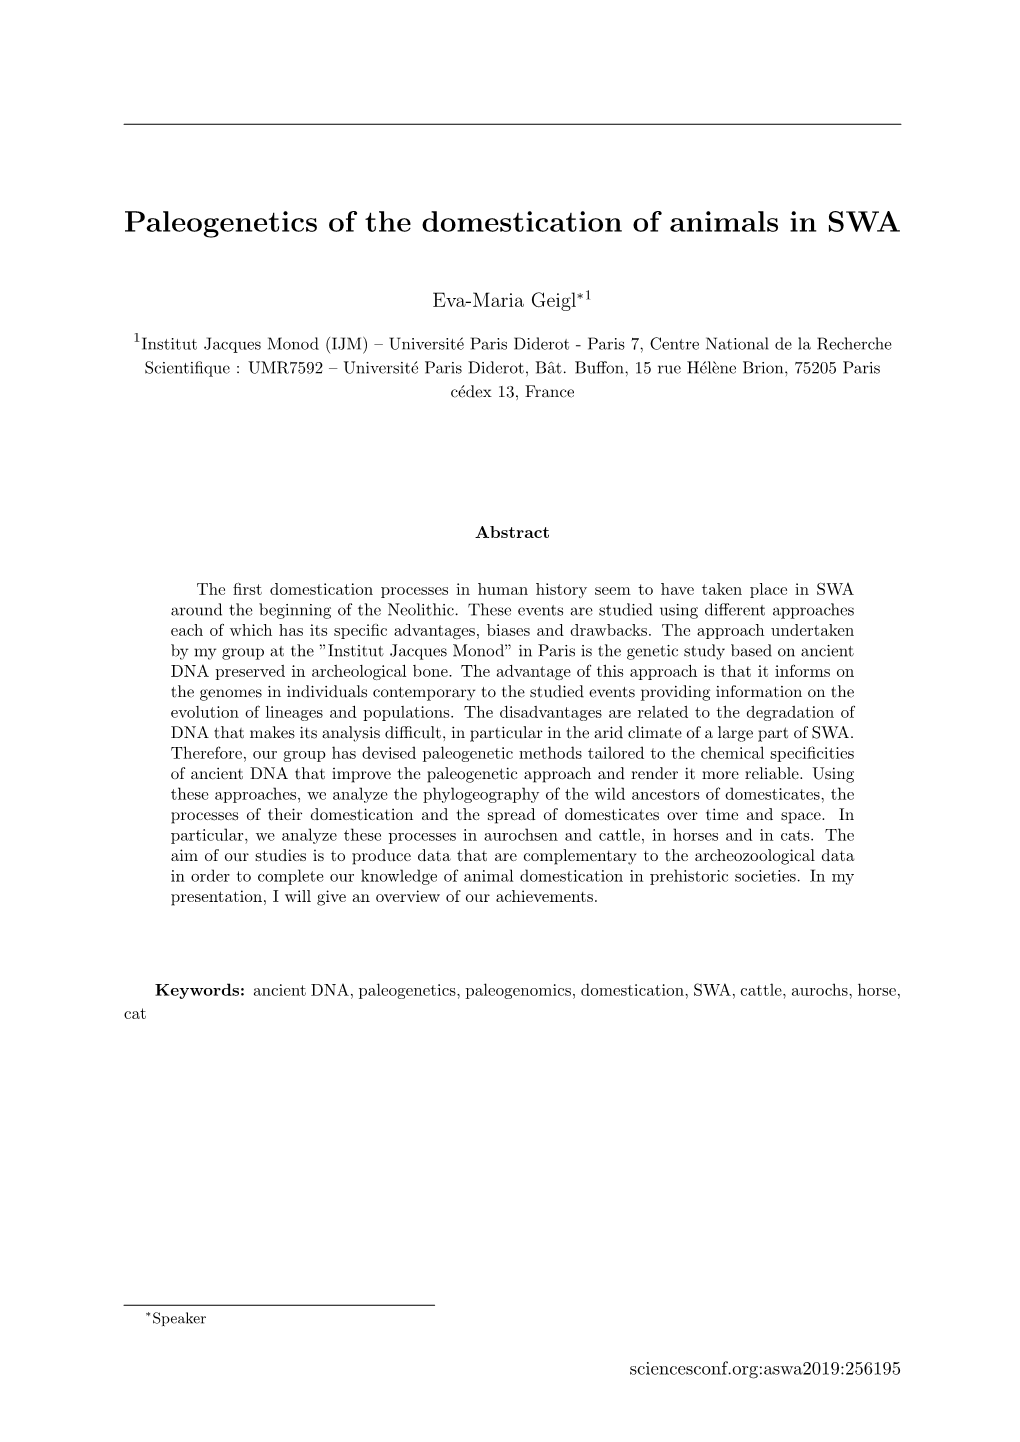 Paleogenetics of the Domestication of Animals in SWA